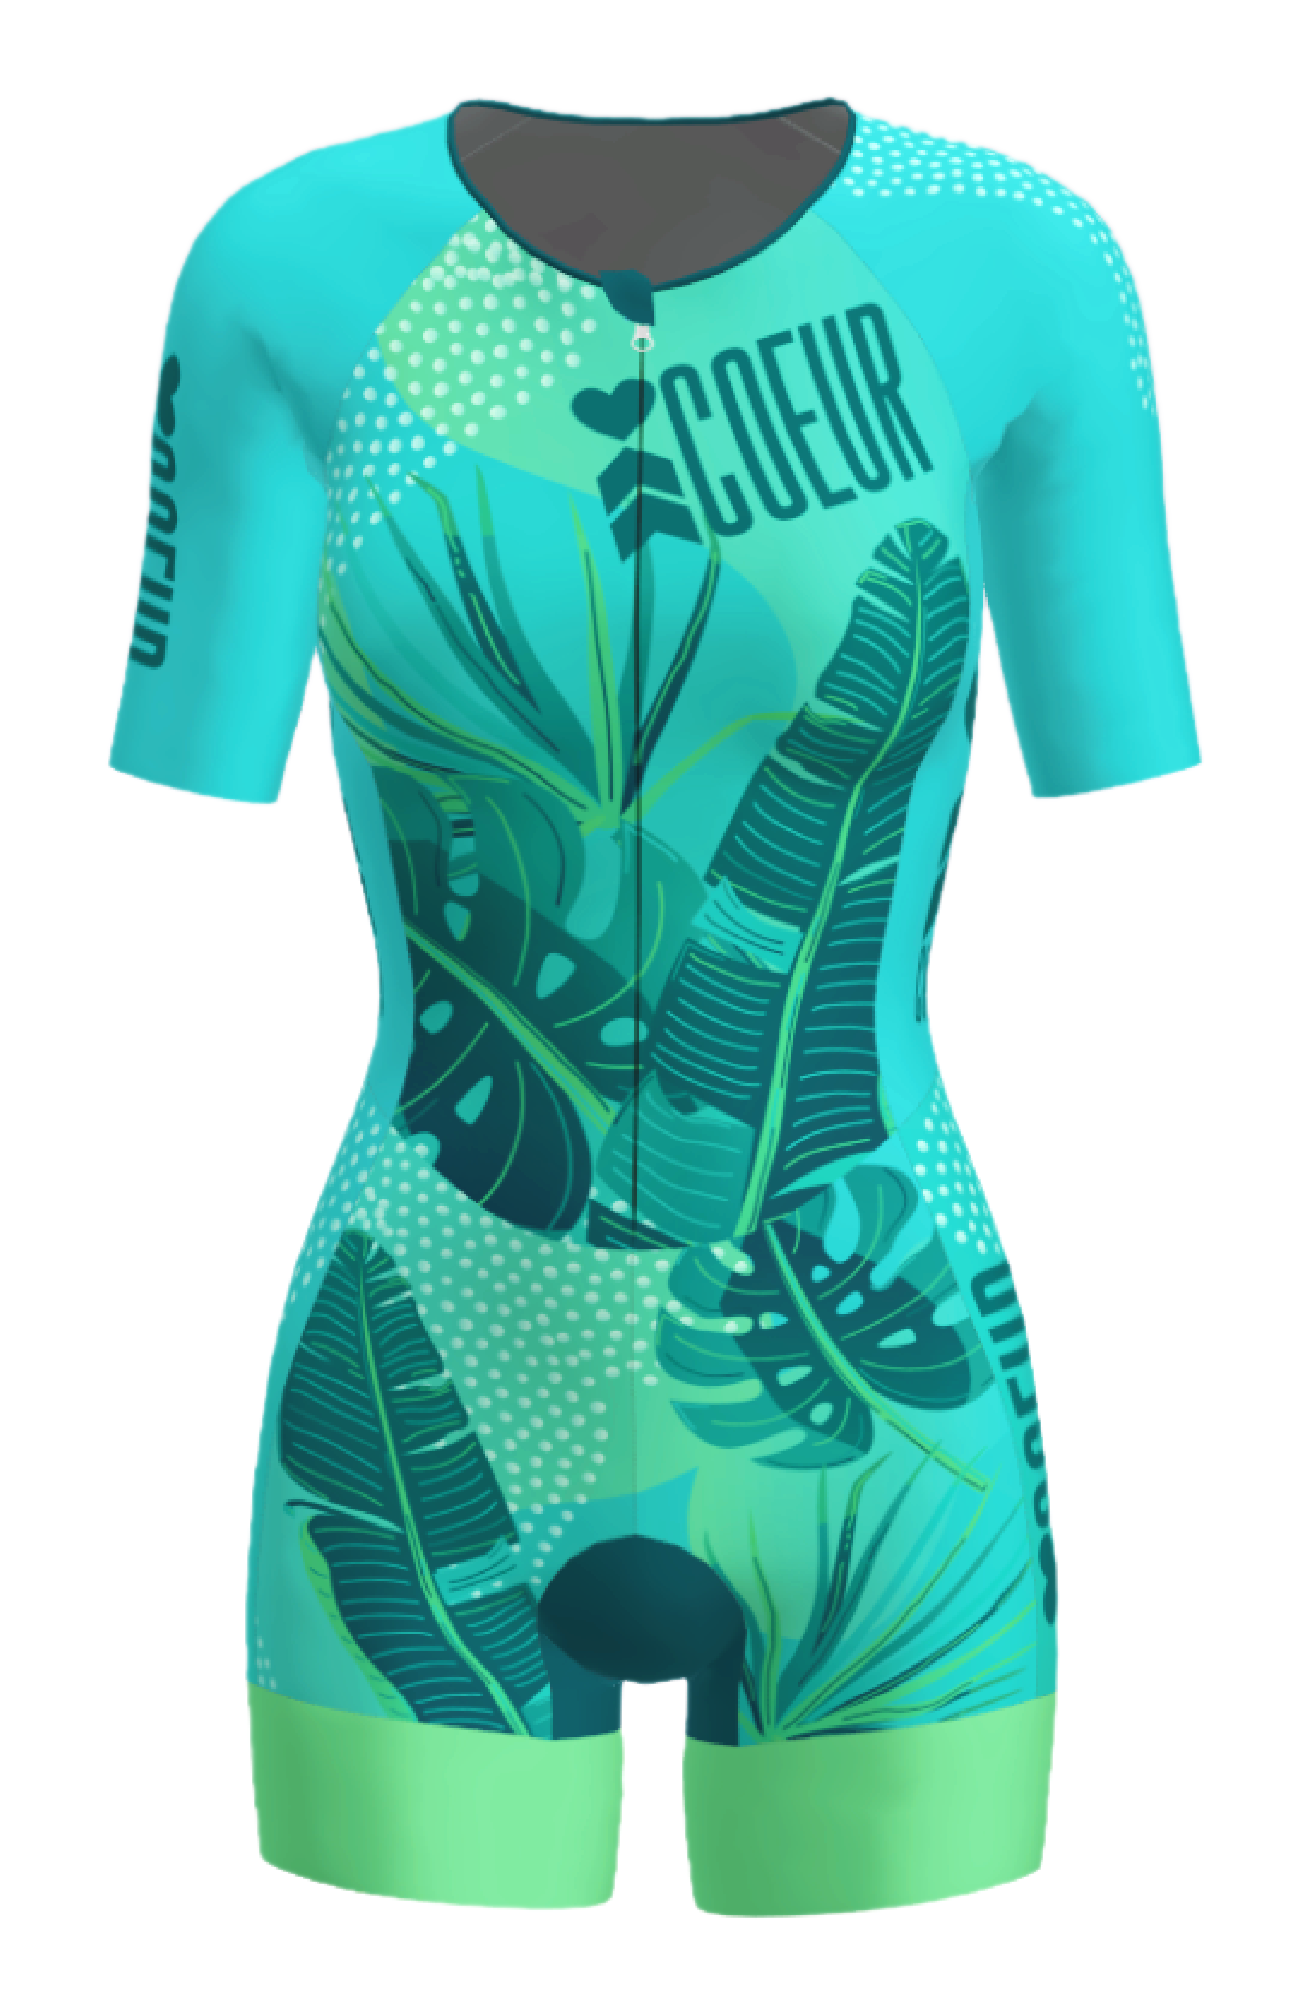 Coeur Sports Zele sleeved tri suit PRESALE! Aloha 23 Zele Sleeved Triathlon Speedsuit